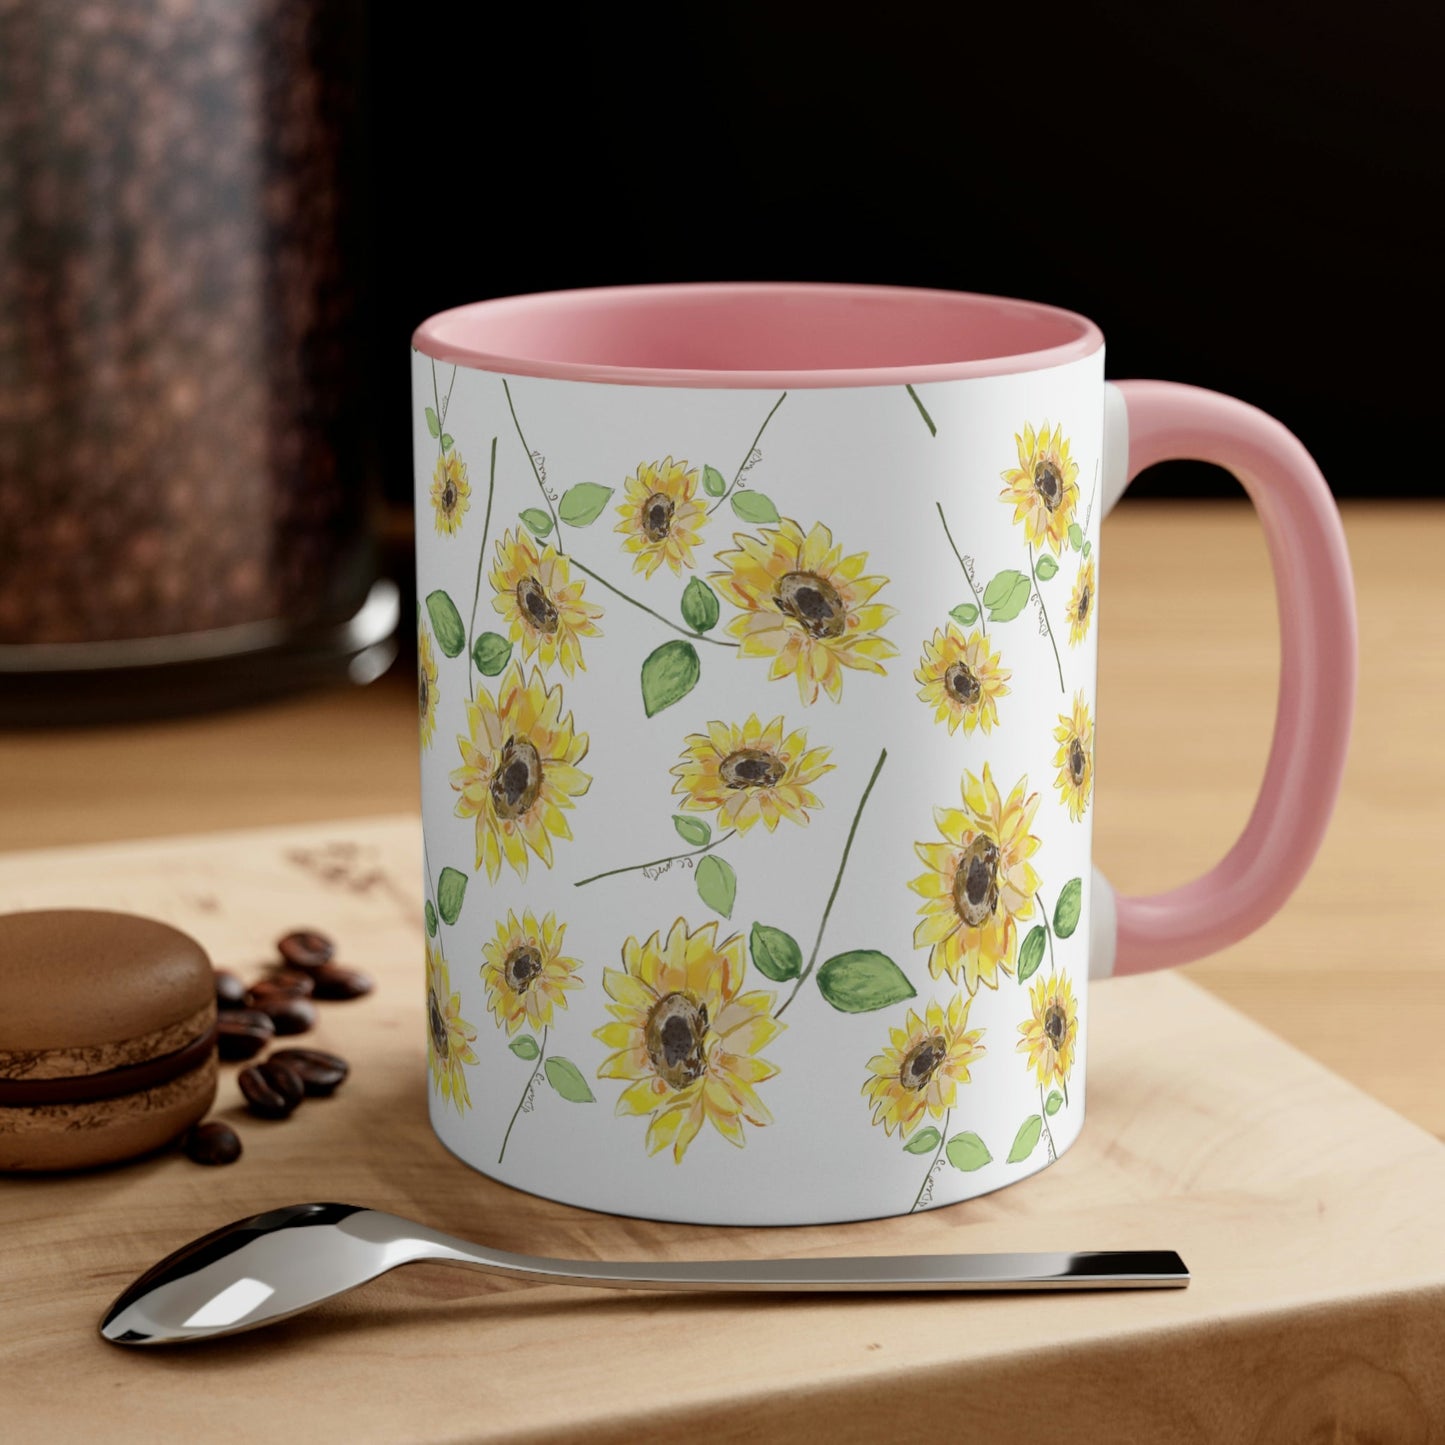 Sunflowers Accent Coffee Mug, 11oz - Blue Cava